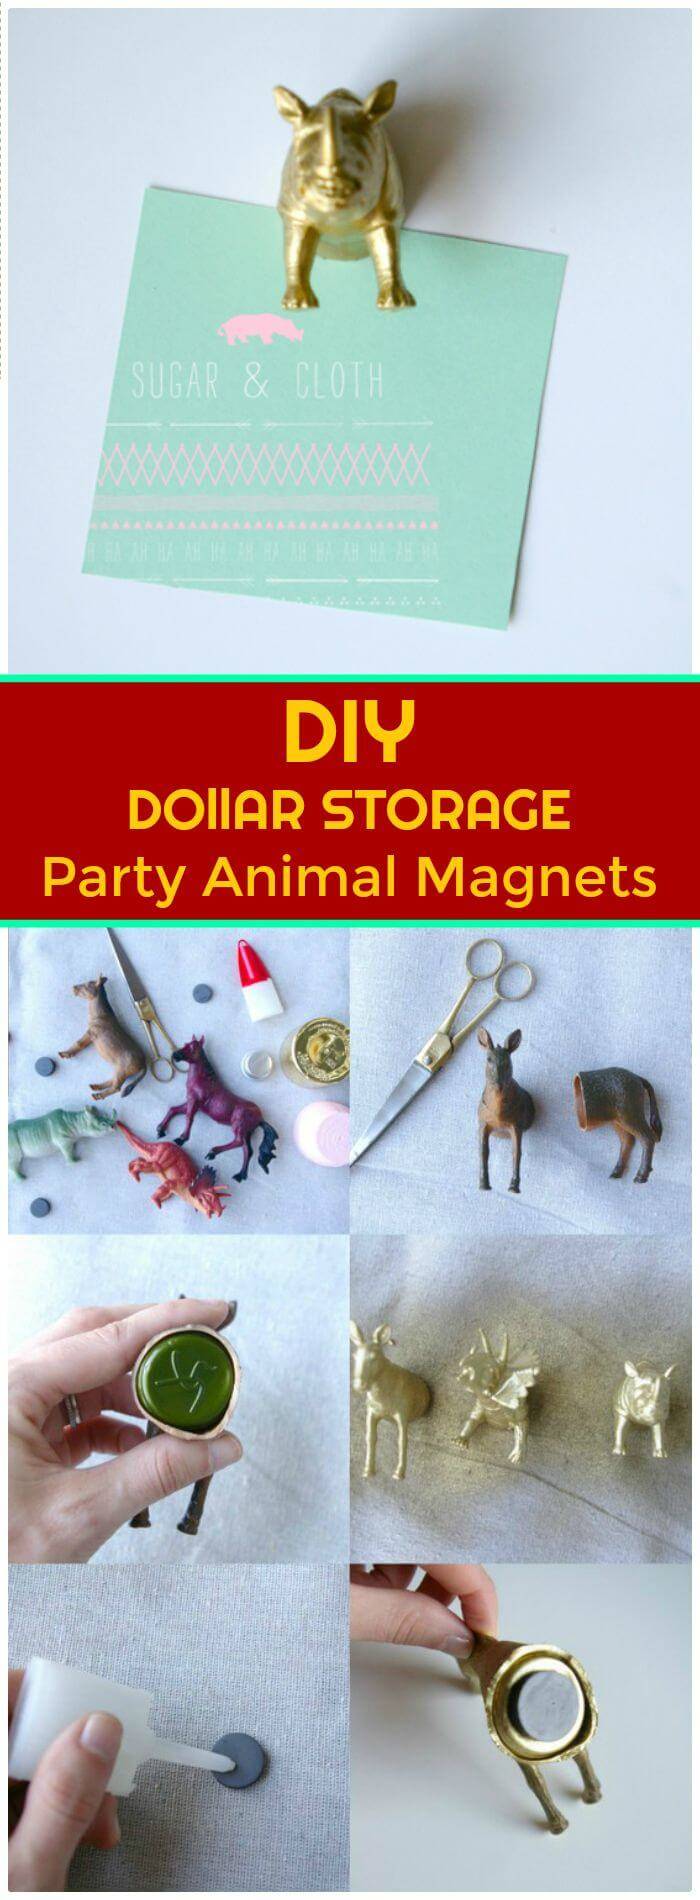 DIY Dollar Storage Party Animal Magnets